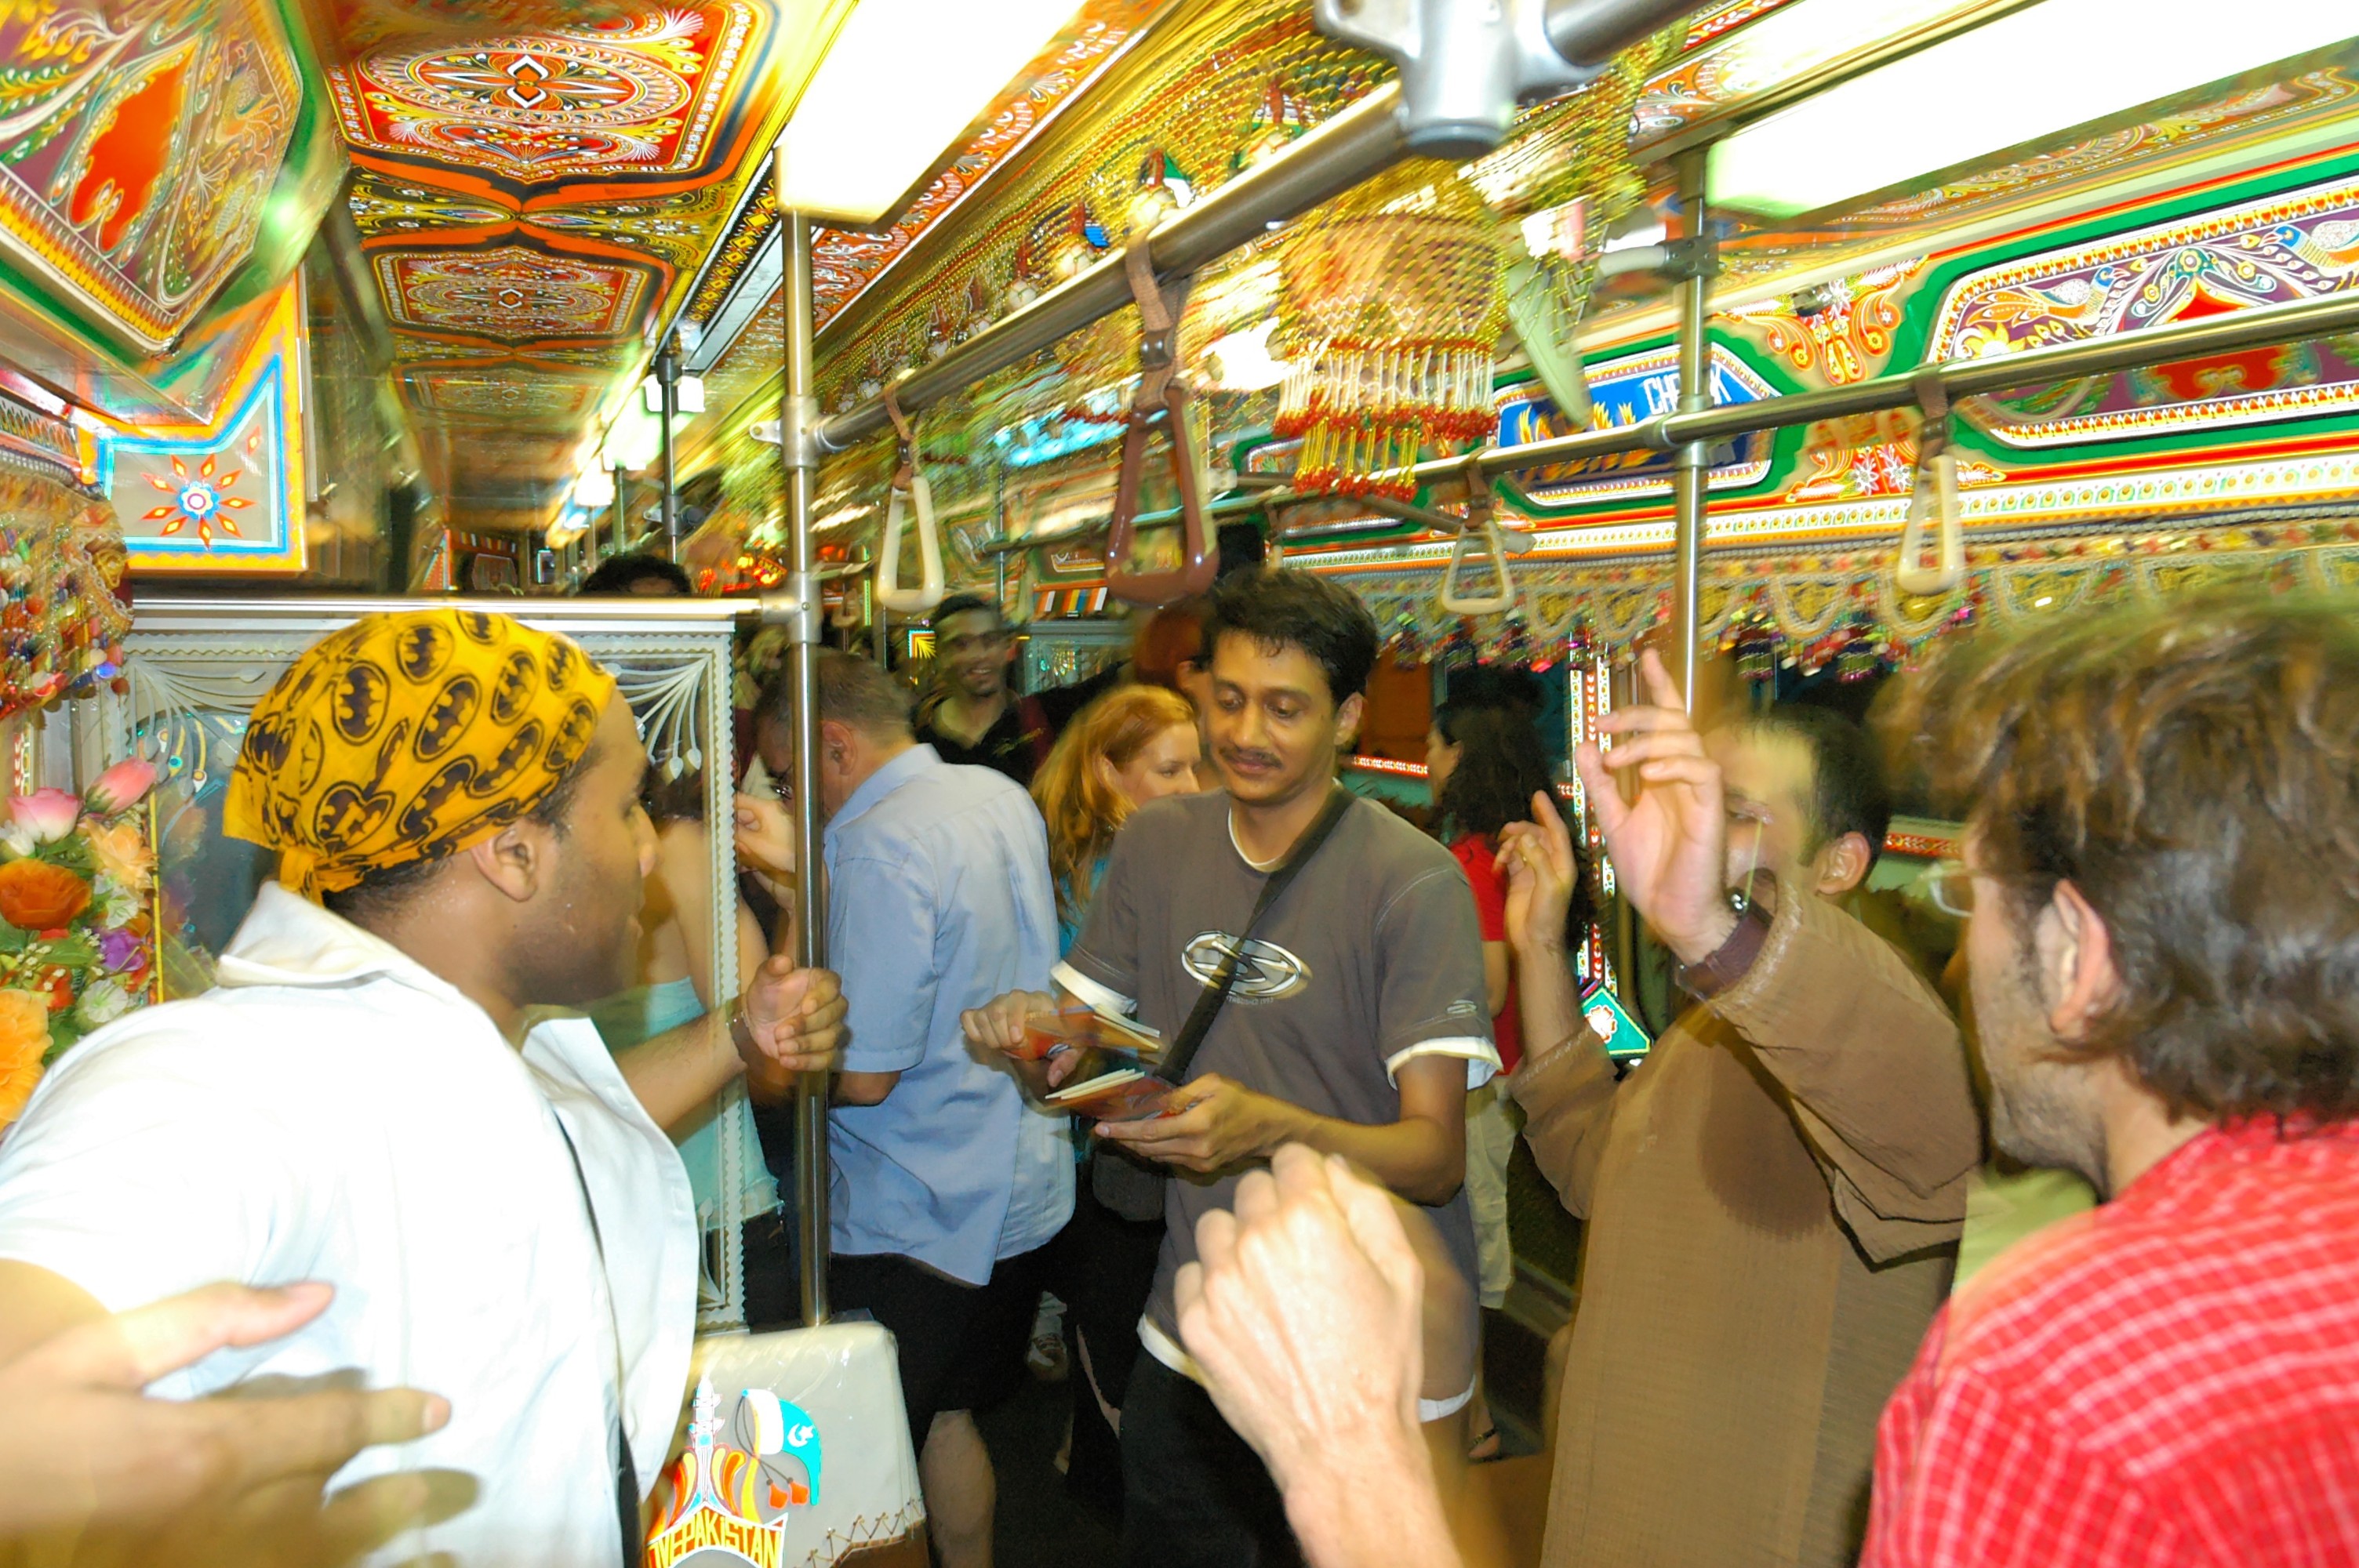 Karachi tram interior